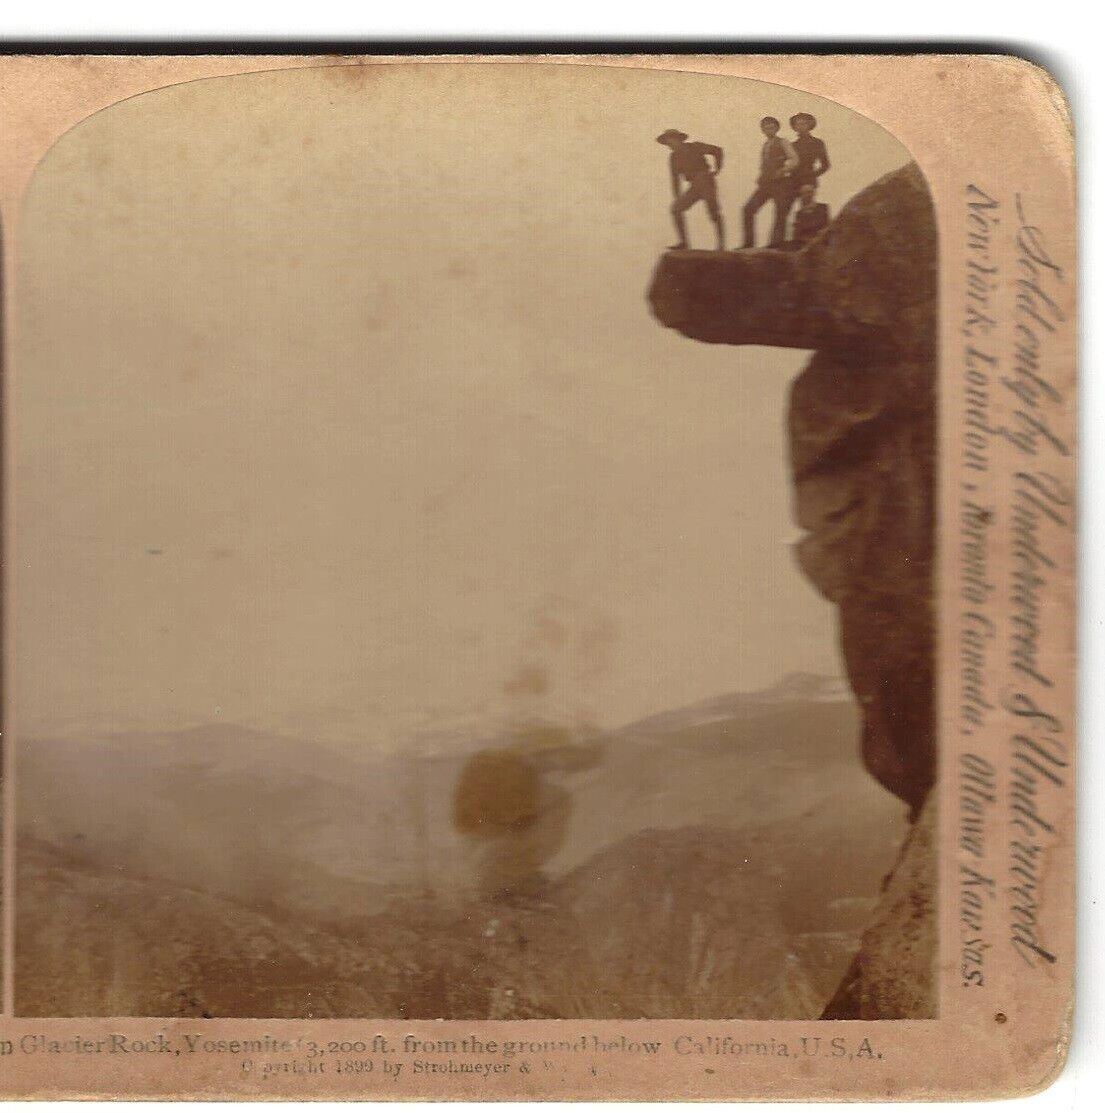 1899 Glacier Rock, Yosemite, California, Strohmeyer/Underwood Stereoview